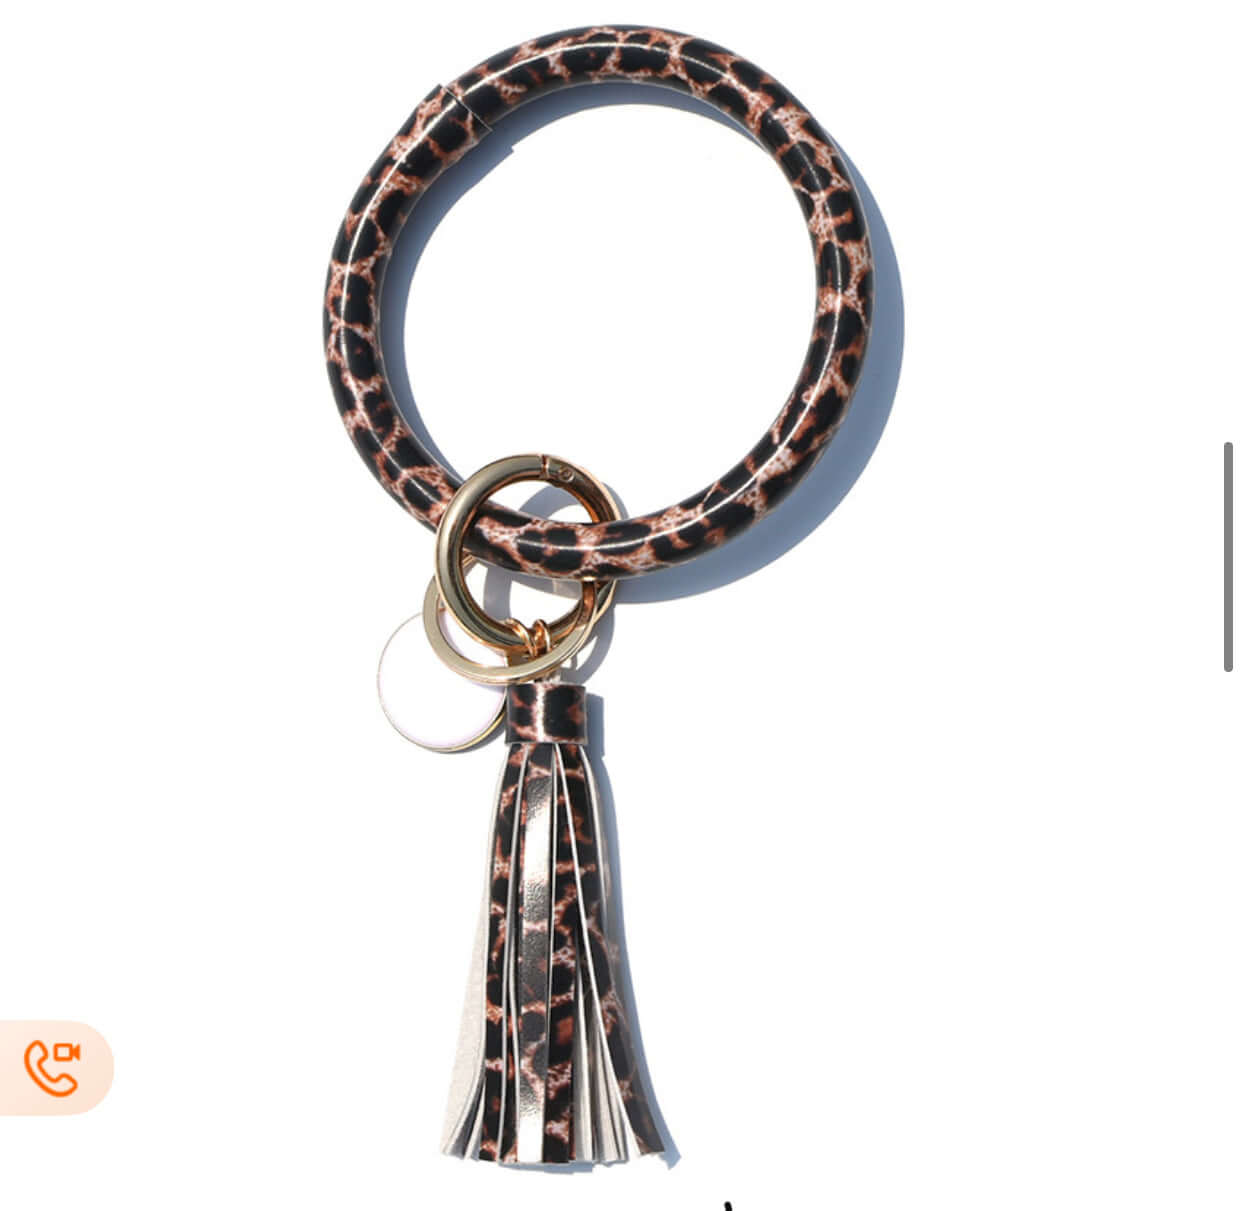 Bangle Bracelet Keychain With Blank Charm For Monogram (NOT SUBLIMATION)